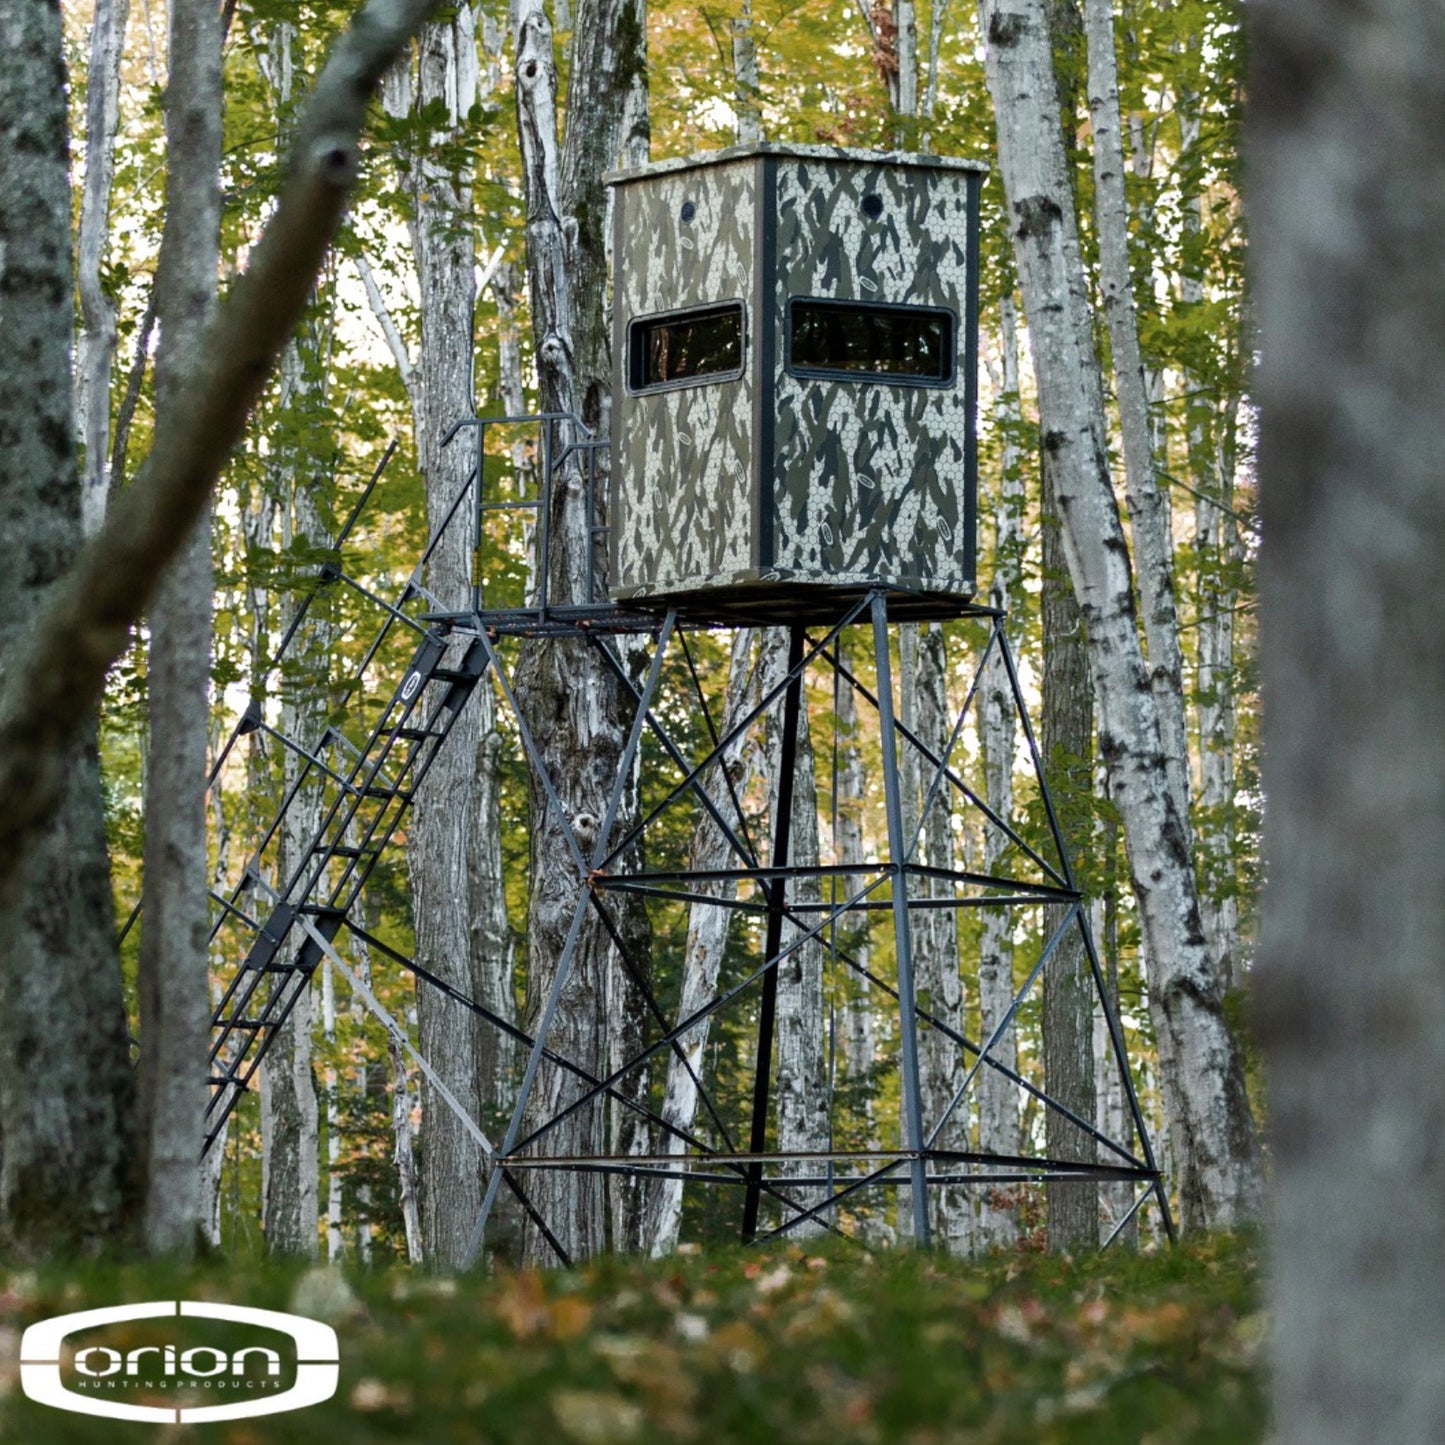 Orion Hunting - 6x6 Premium Deer Hunting Blind